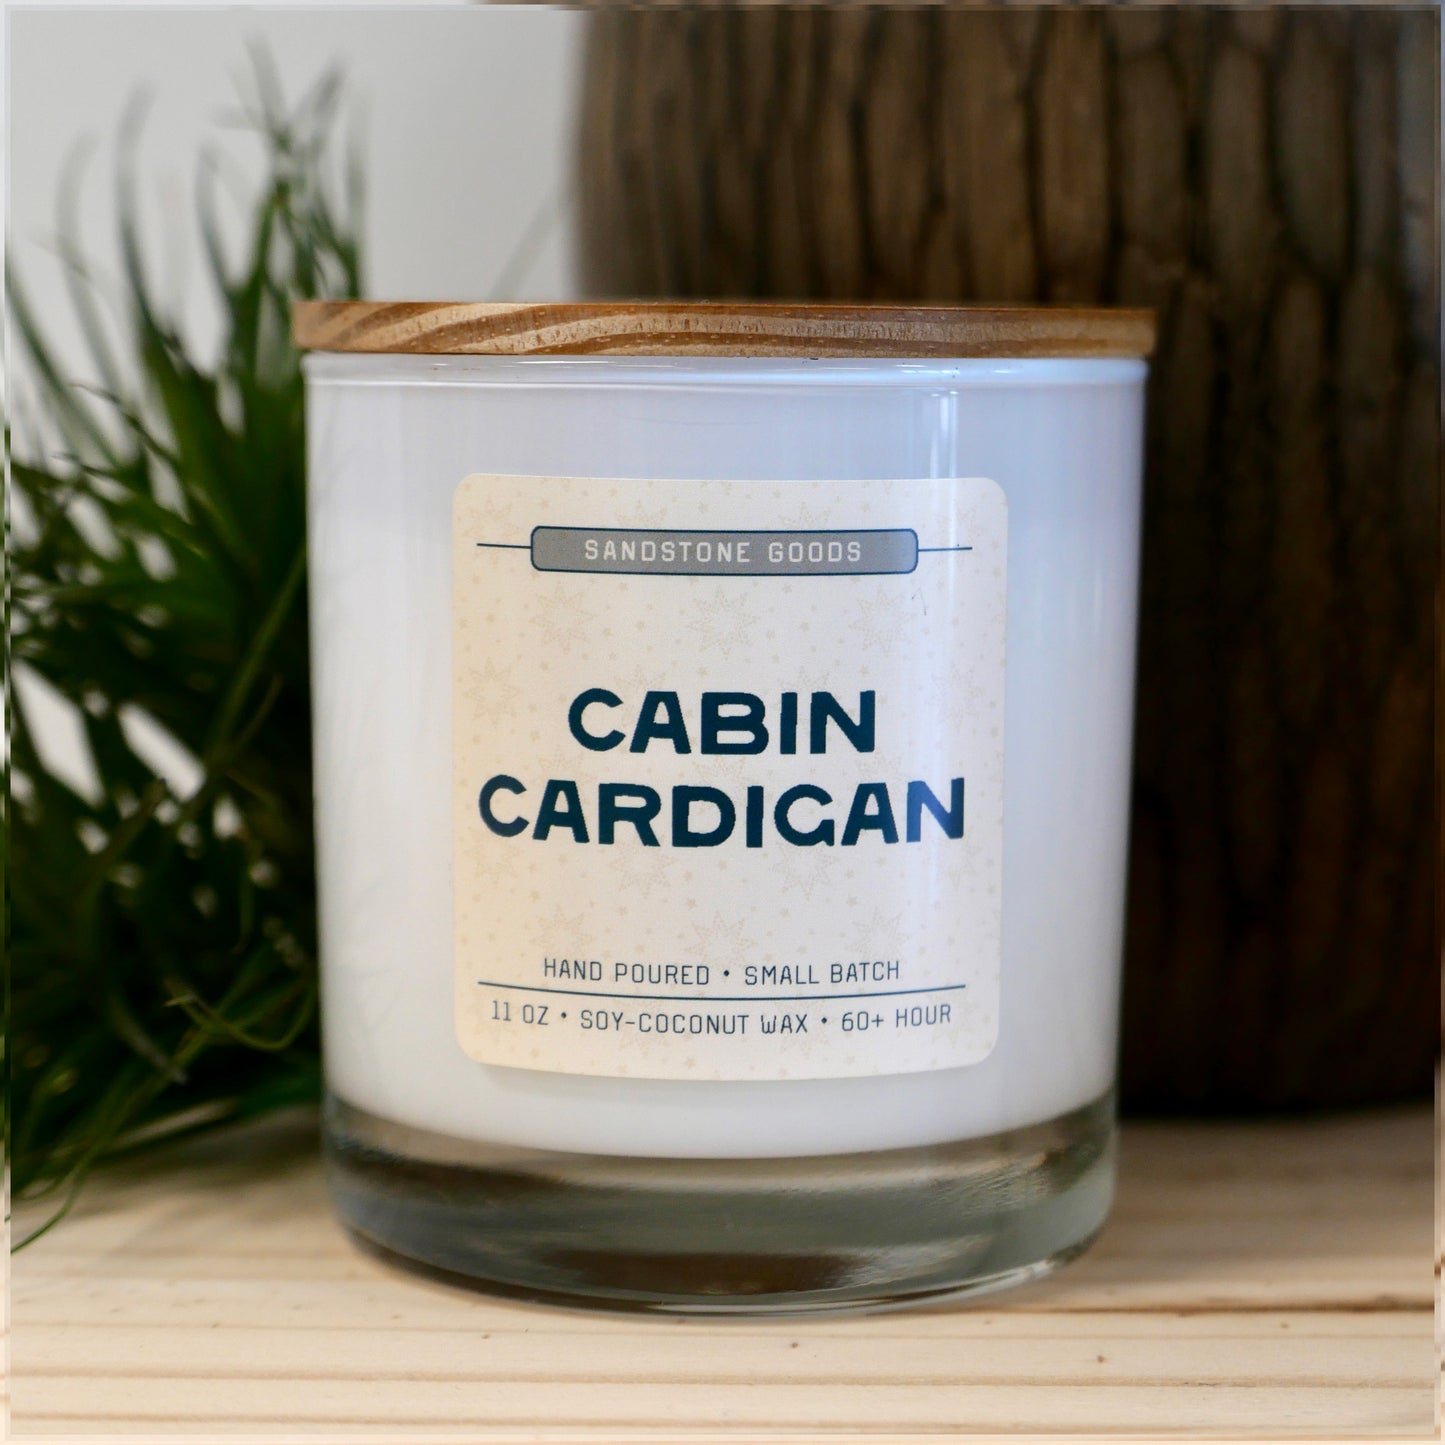 Cabin Cardigan